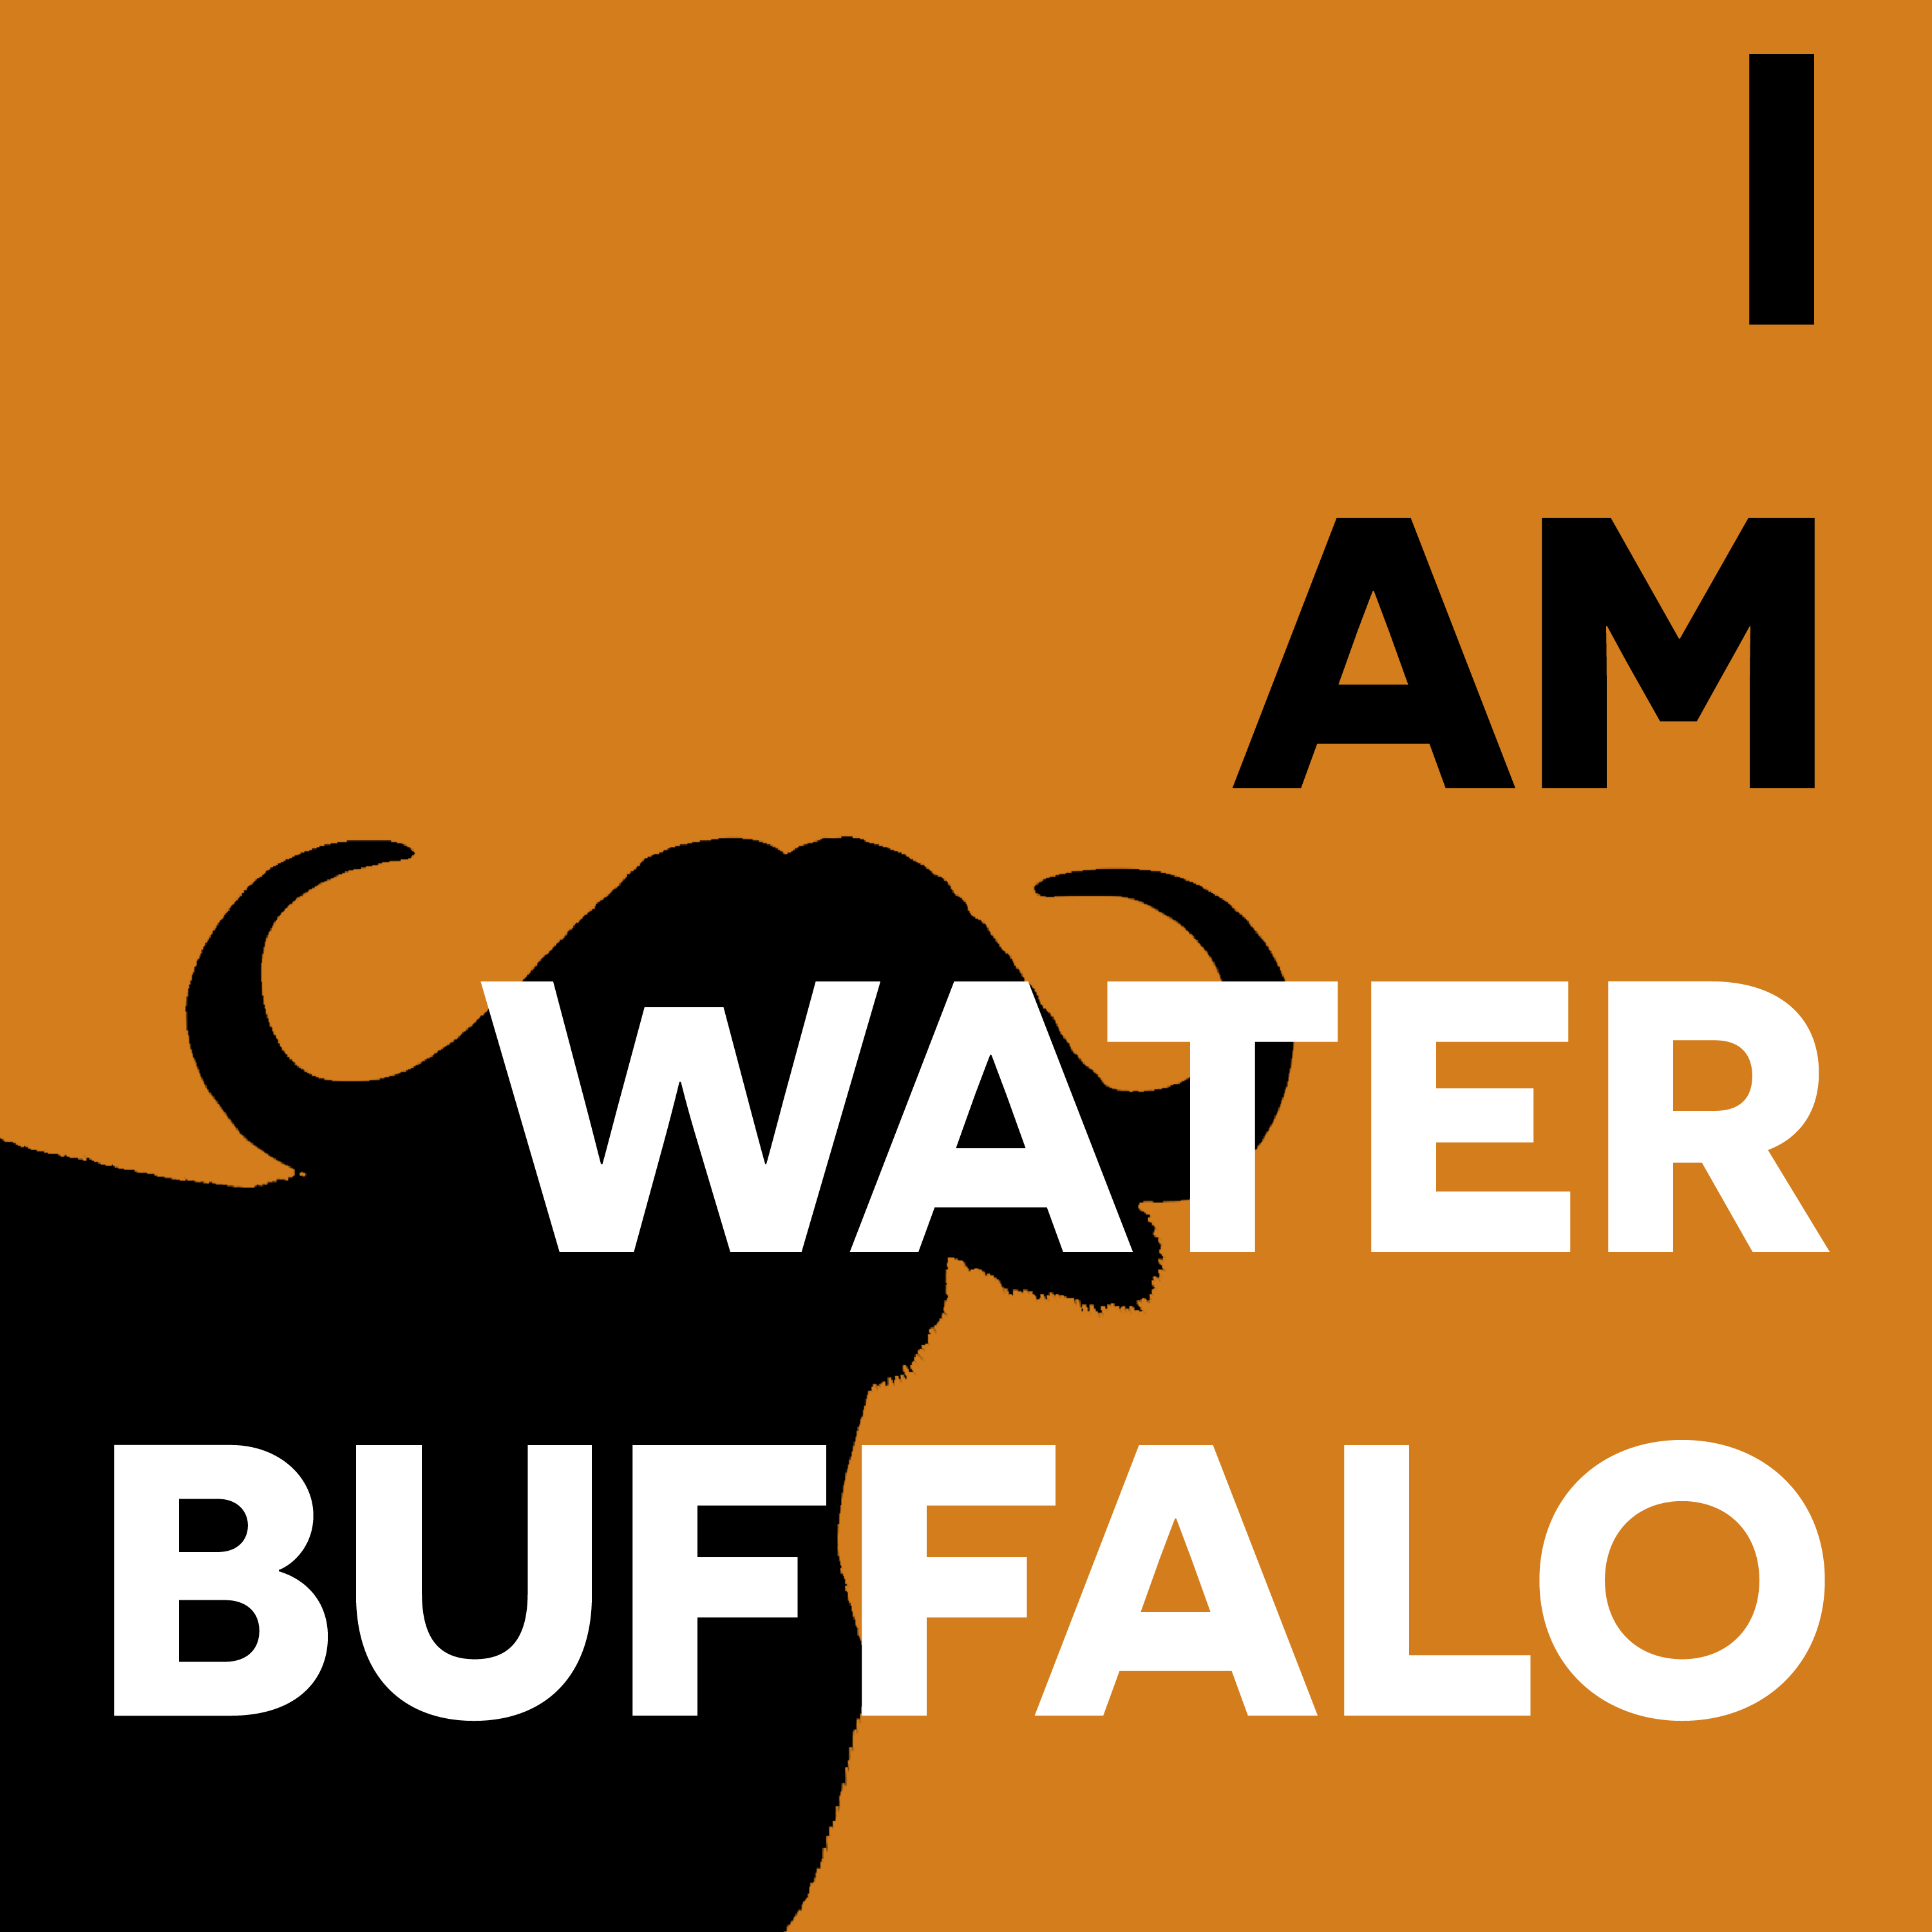 I am Water Buffalo